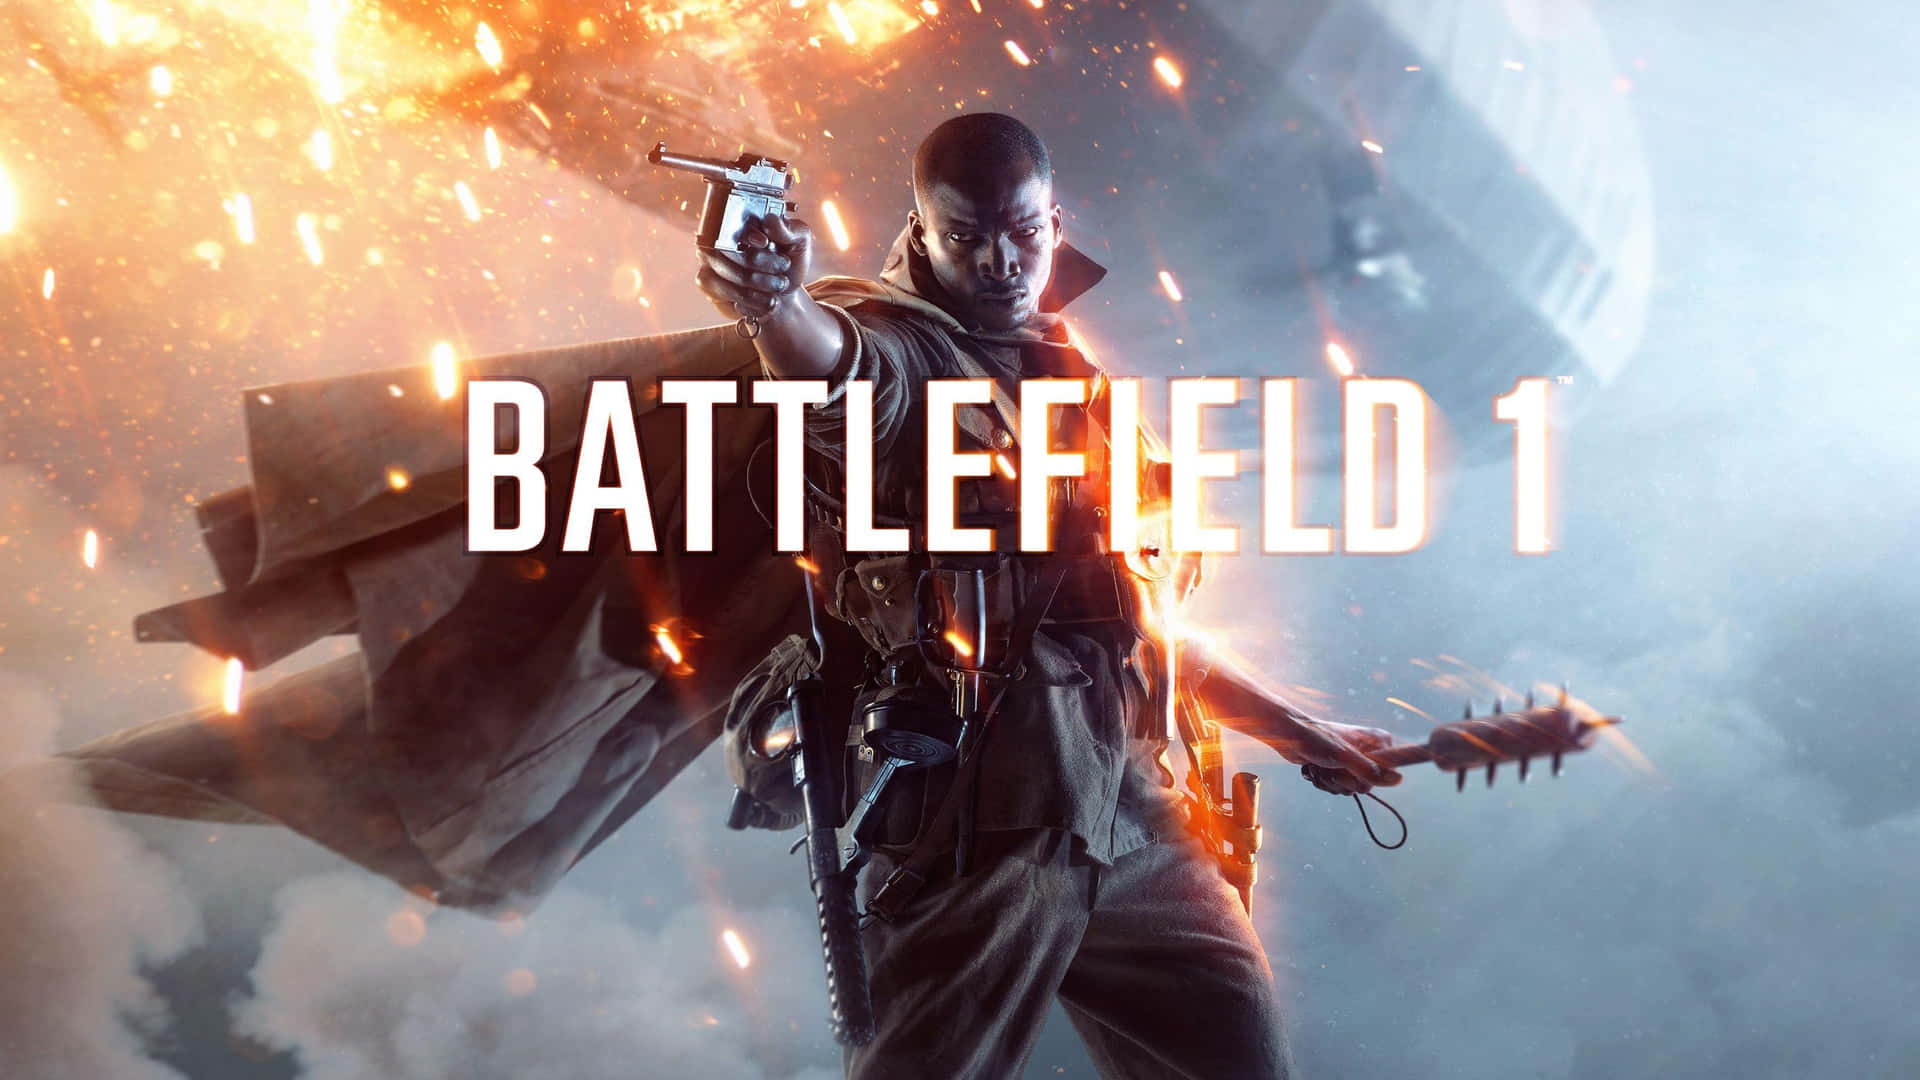 1440p Battlefield 1 Background Wallpaper